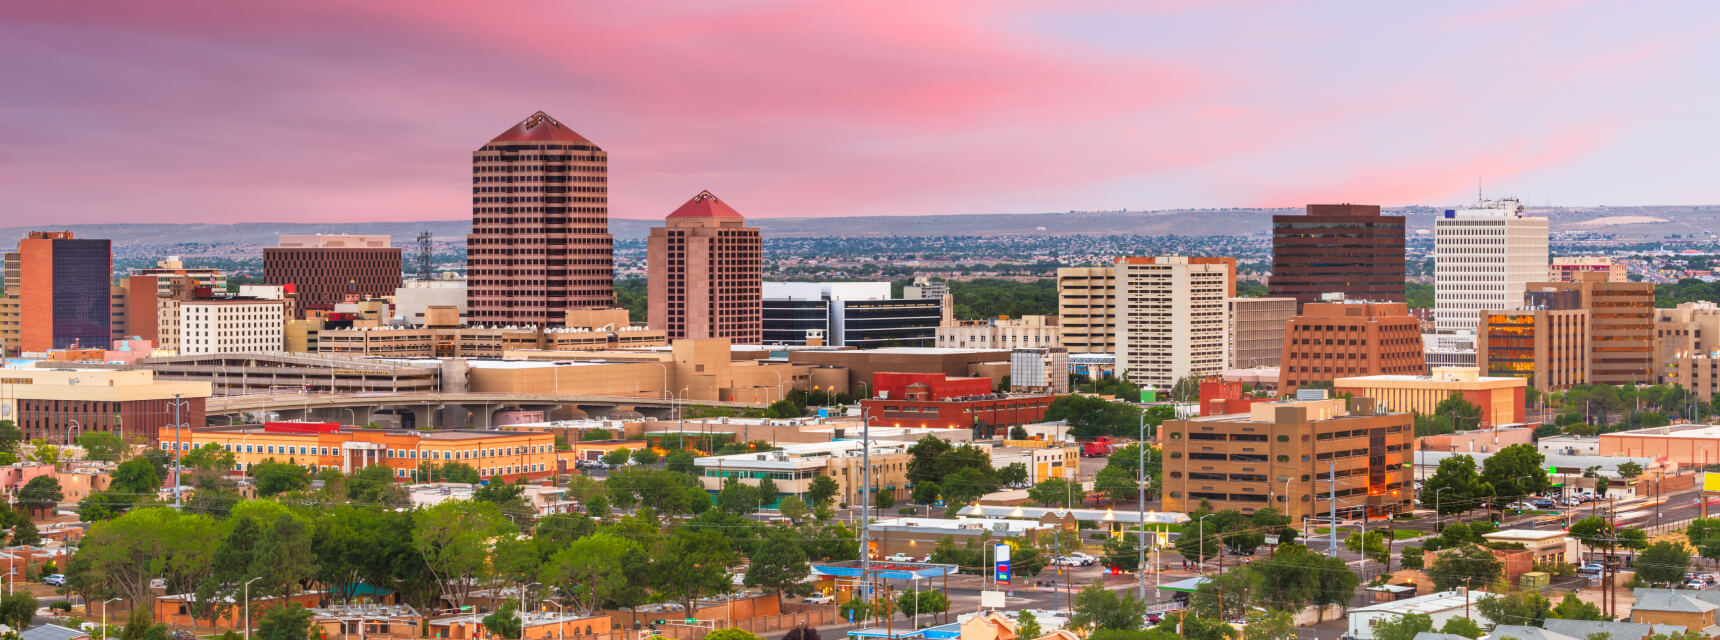 Best Places to Meet Singles in Albuquerque